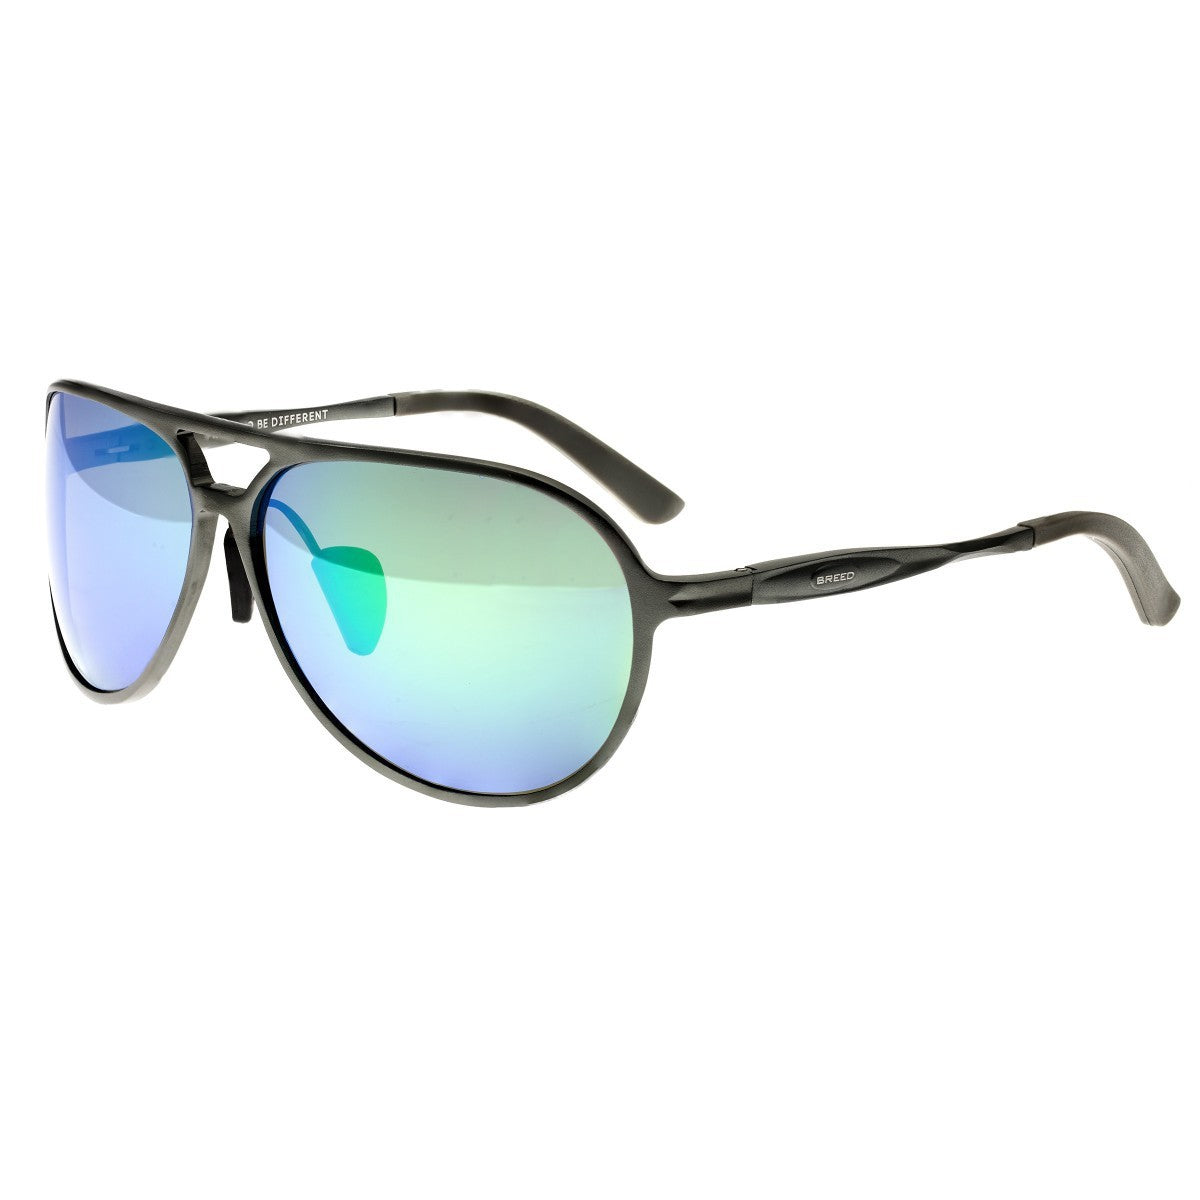 Breed Earhart Aluminium Polarized Sunglasses - Gunmetal/Blue-Green - BSG011GM